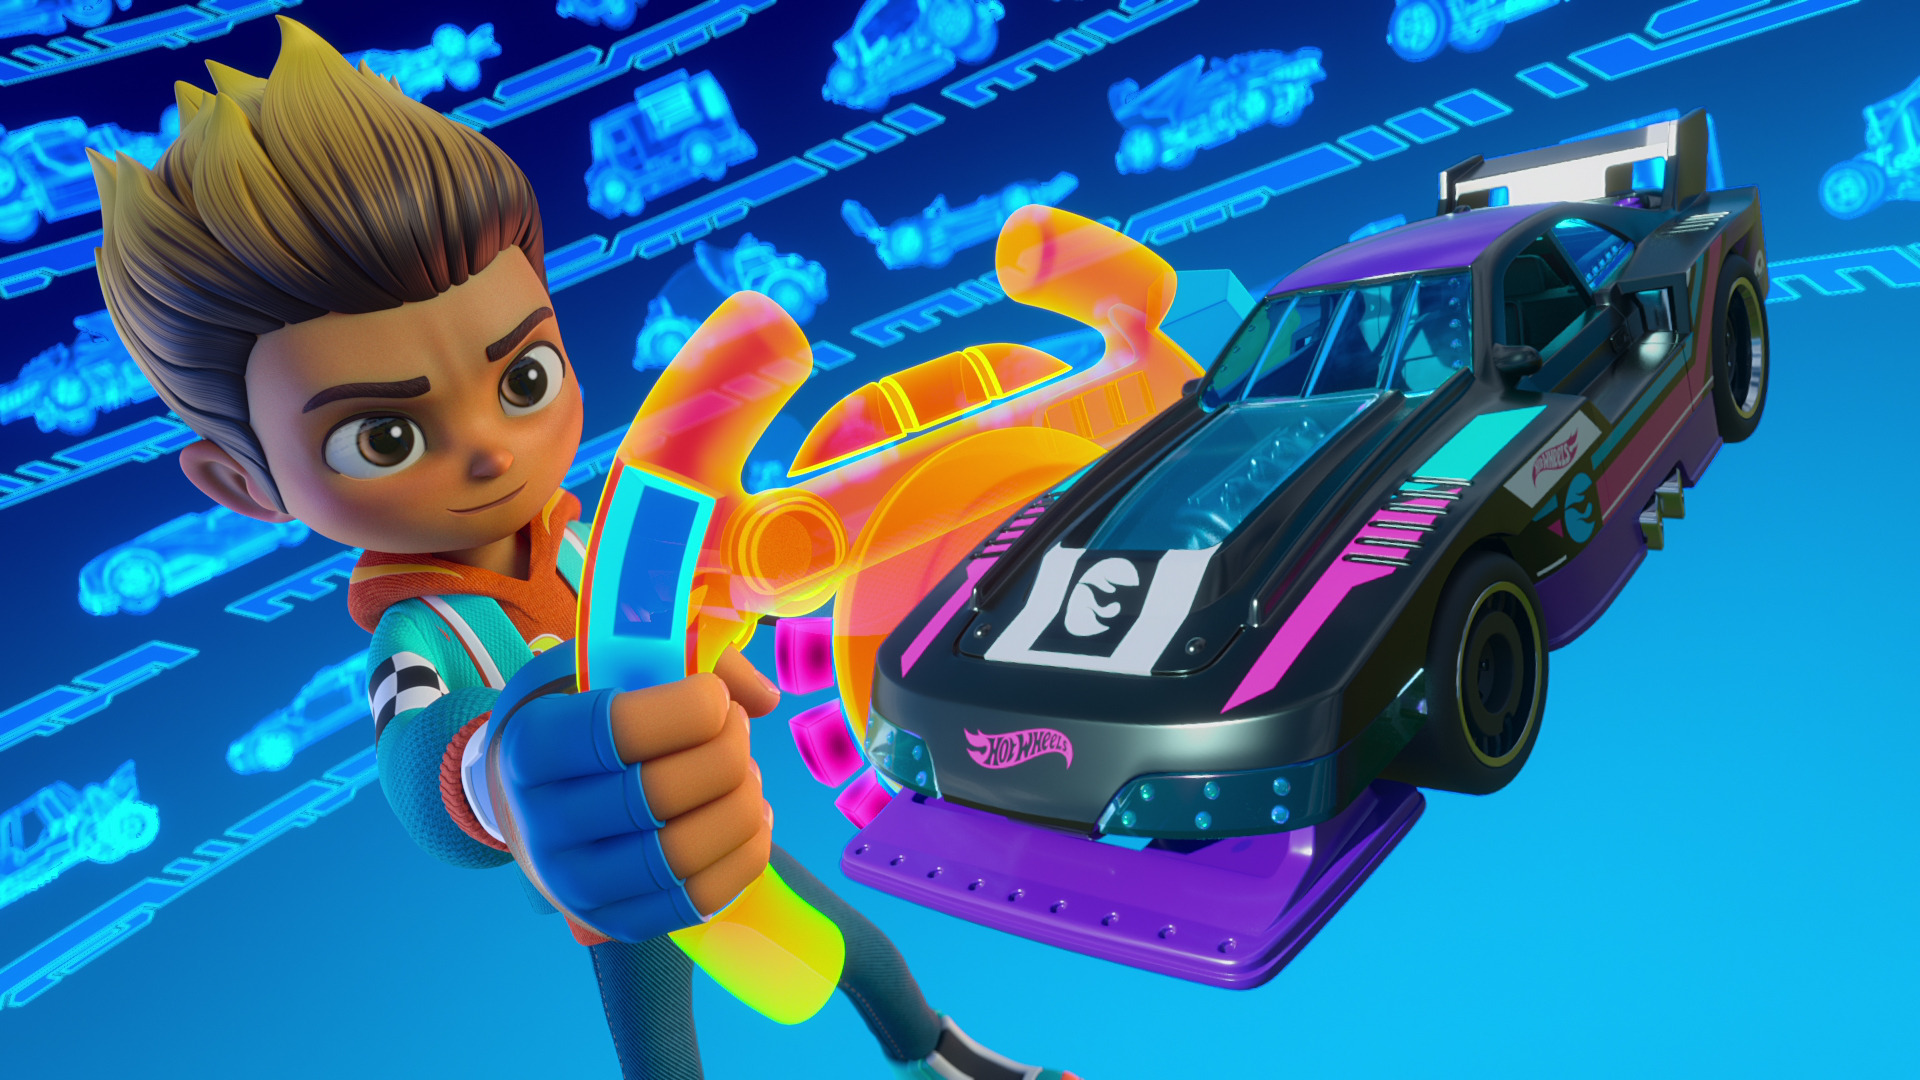 character playing a virtual racing game